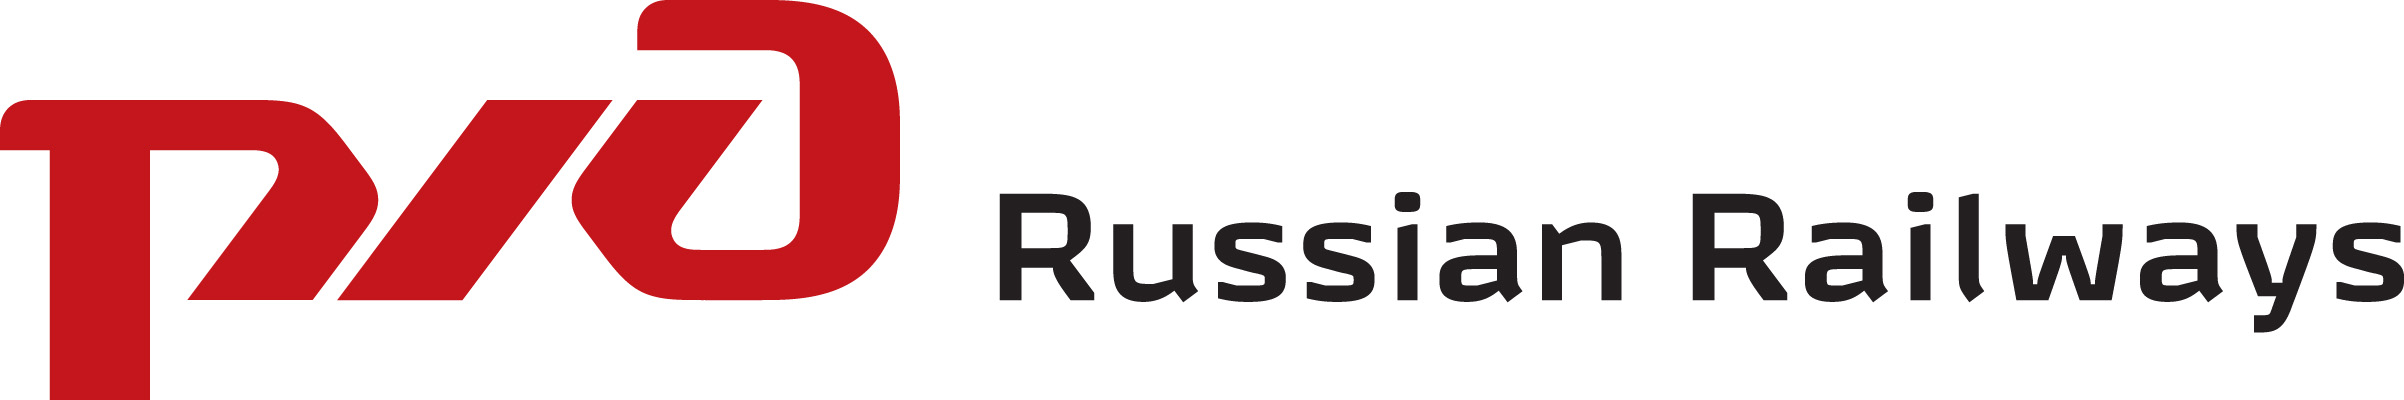 Russia-Logos